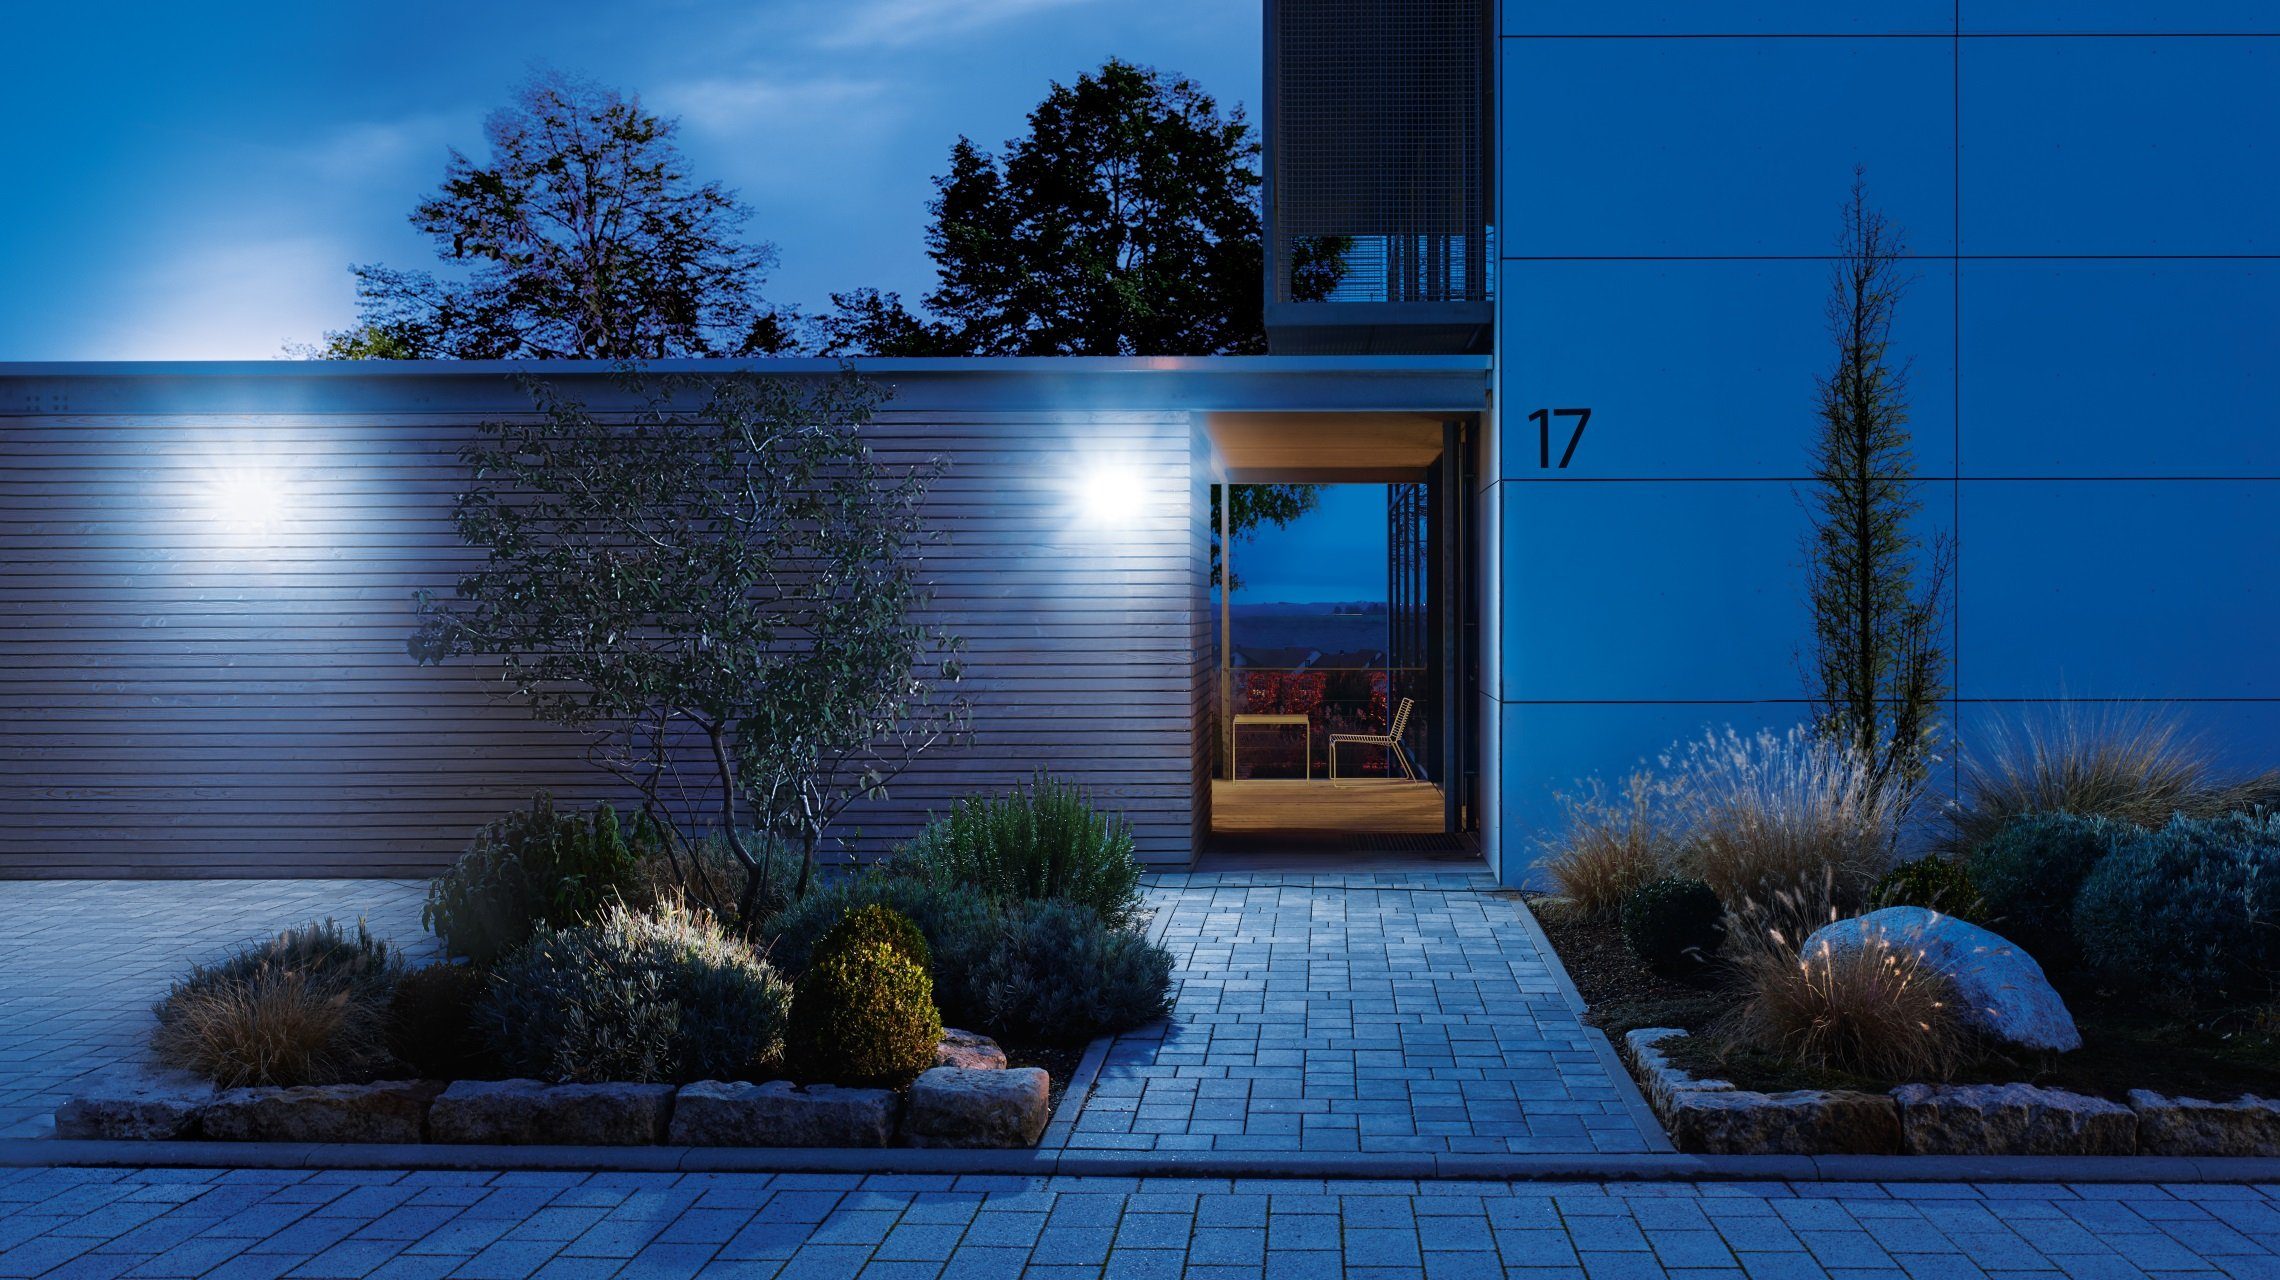 LED integriert, schwenkbar Wandstrahler home XLED fest Warmweiß, voll steinel K, LED 2, 3000